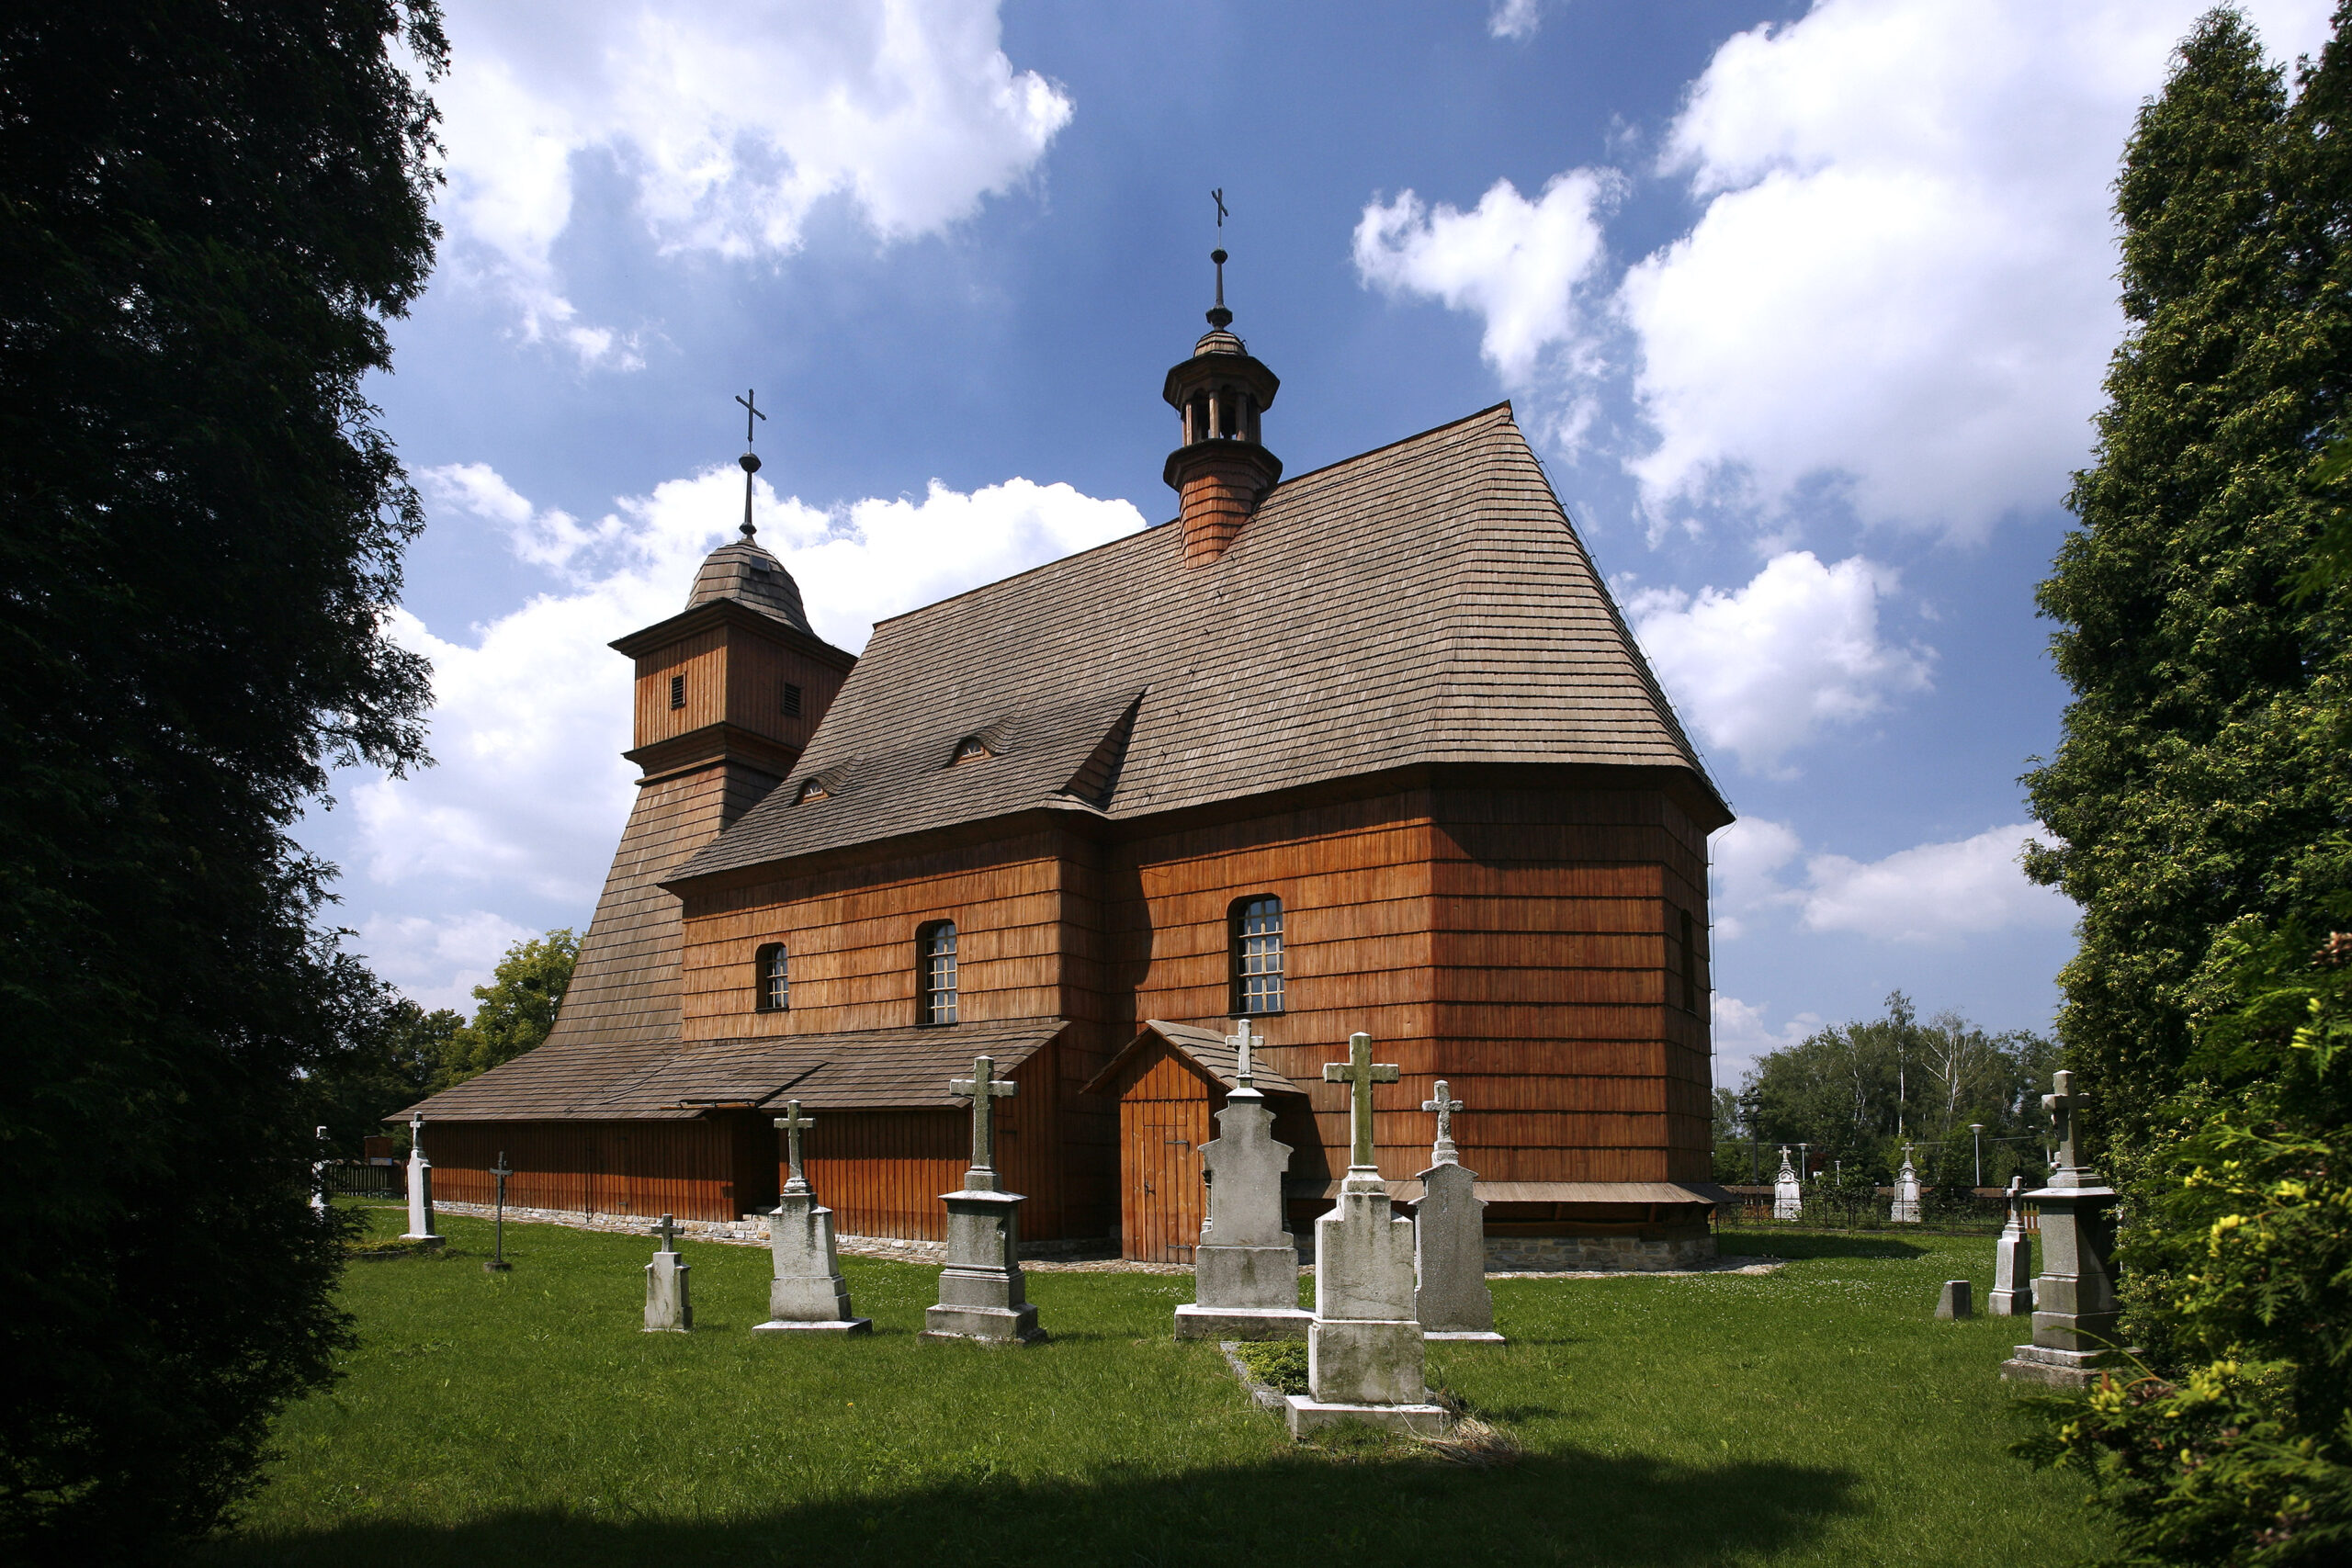 The Wooden Saint Catherine Church in Ostrava